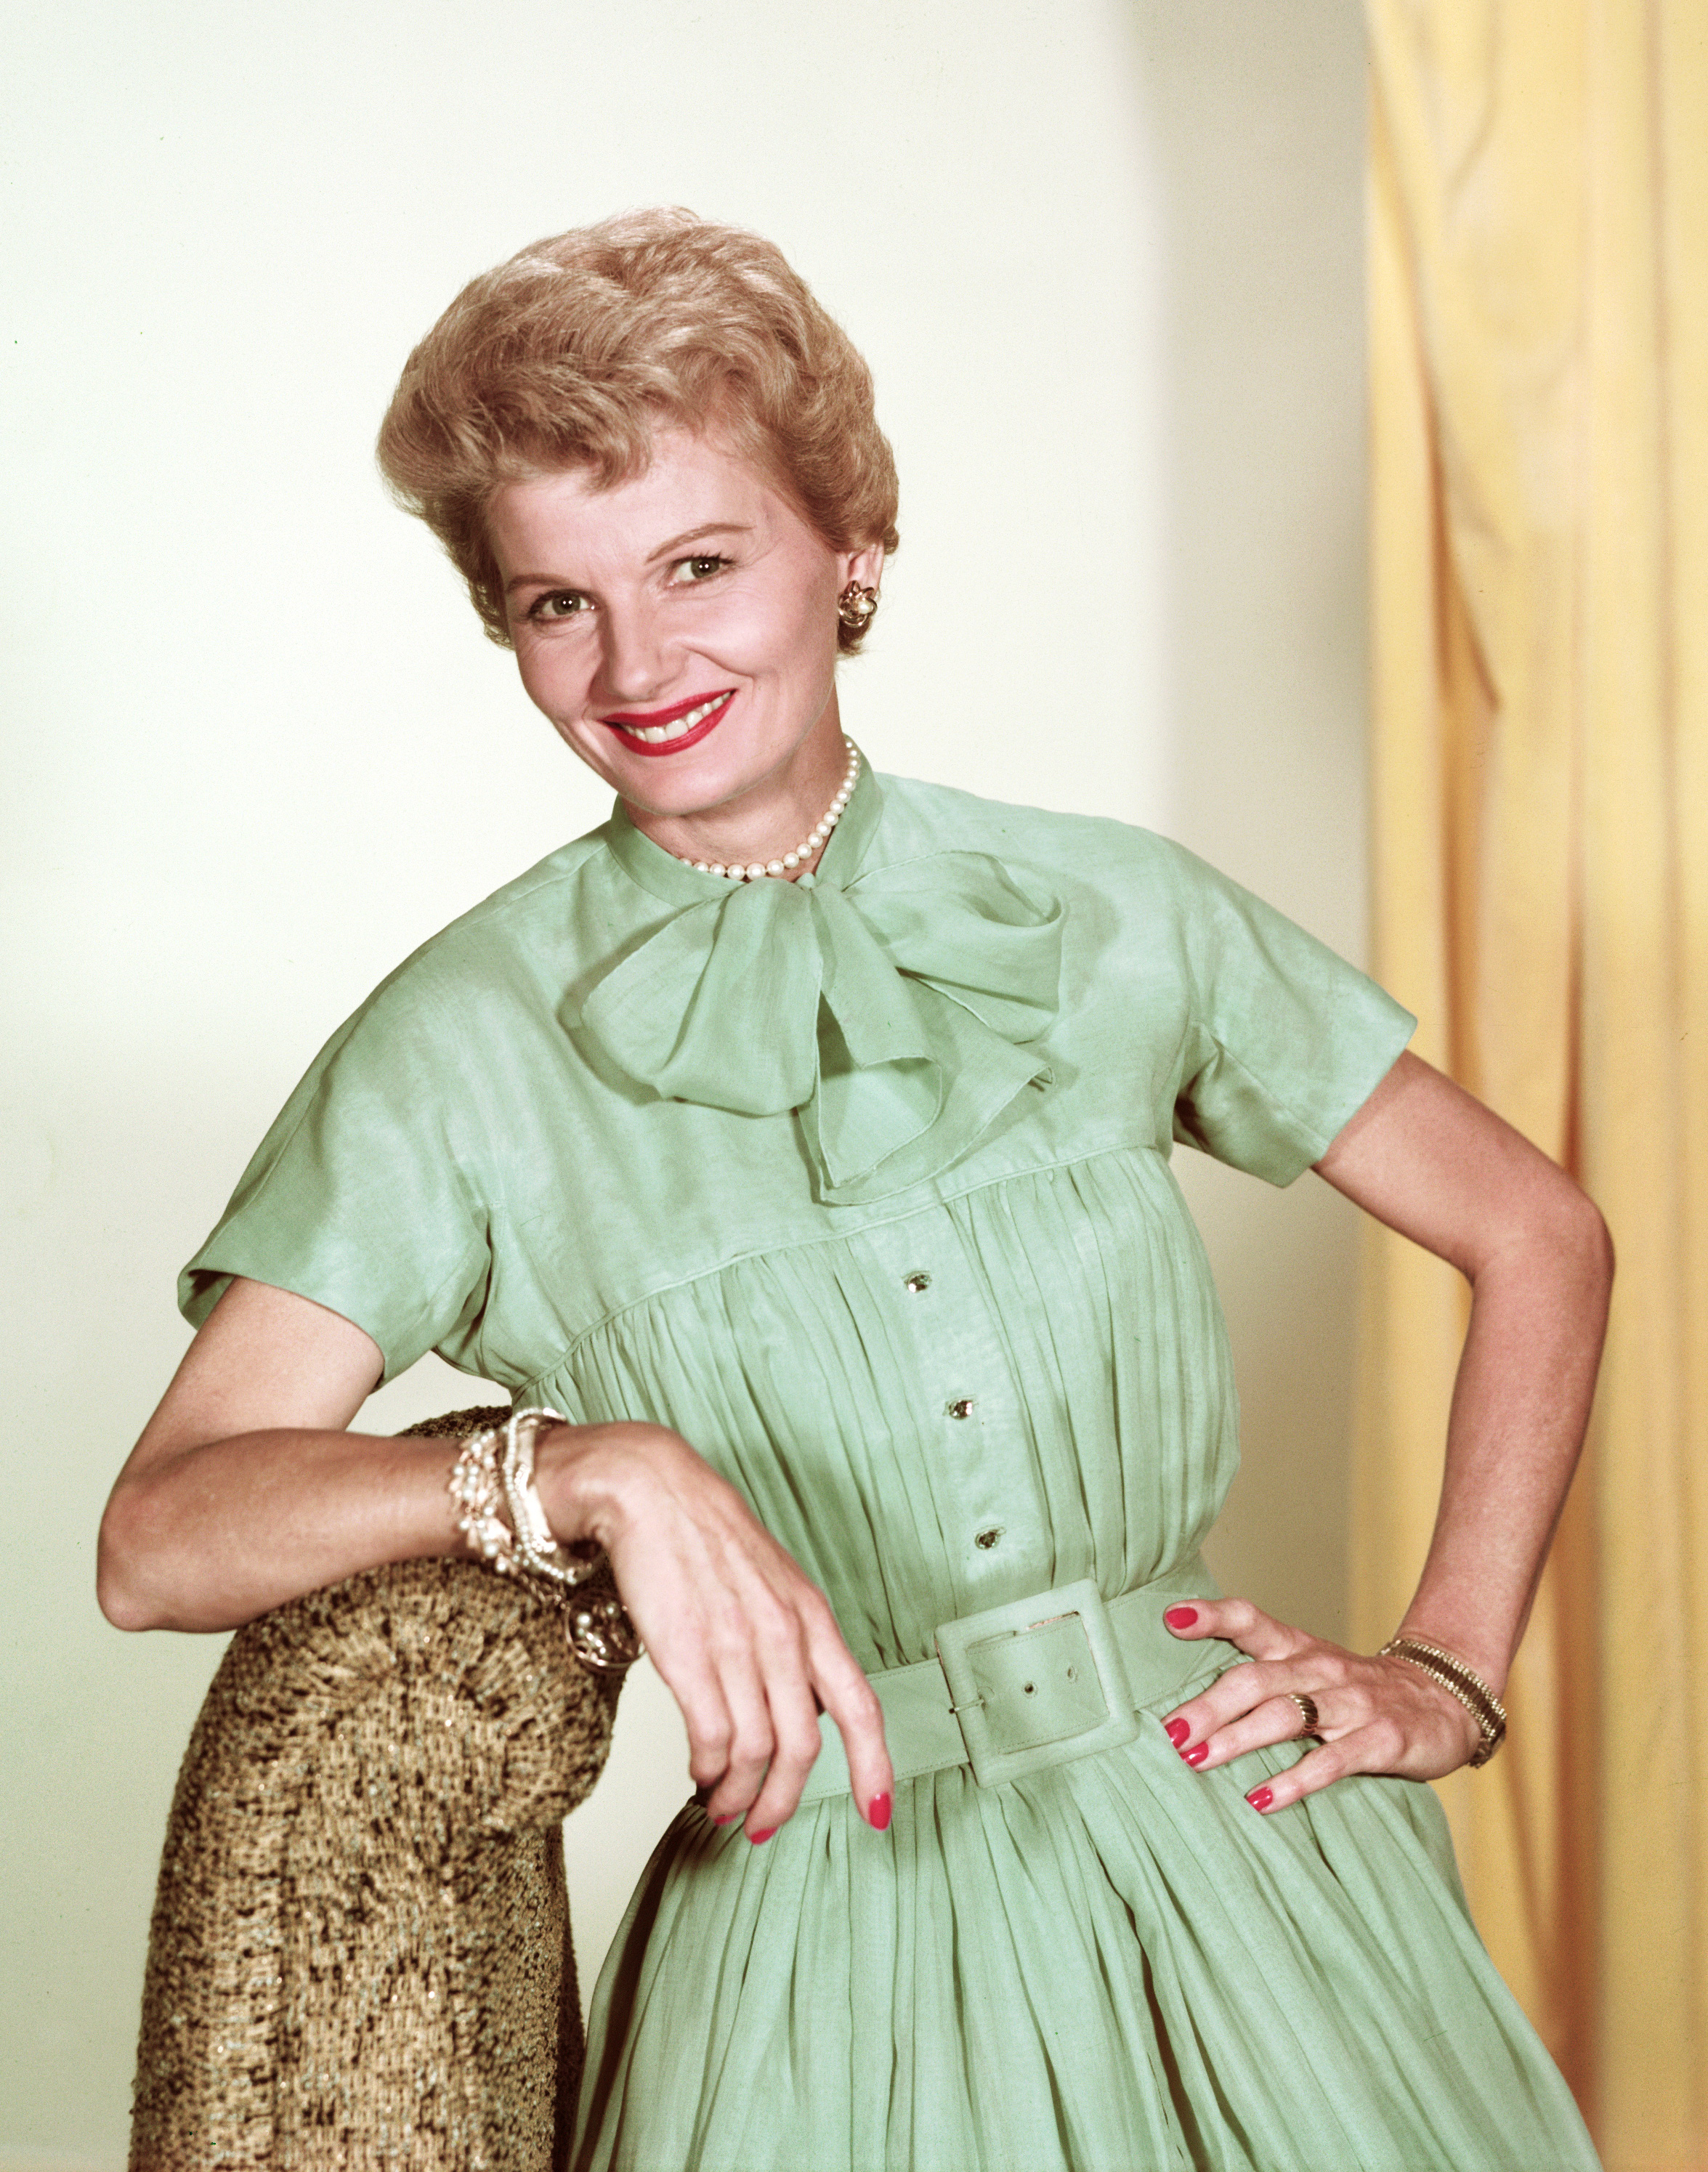 Barbara Billingsley as June Cleaver in the 1950s sitcom Leave It to Beaver